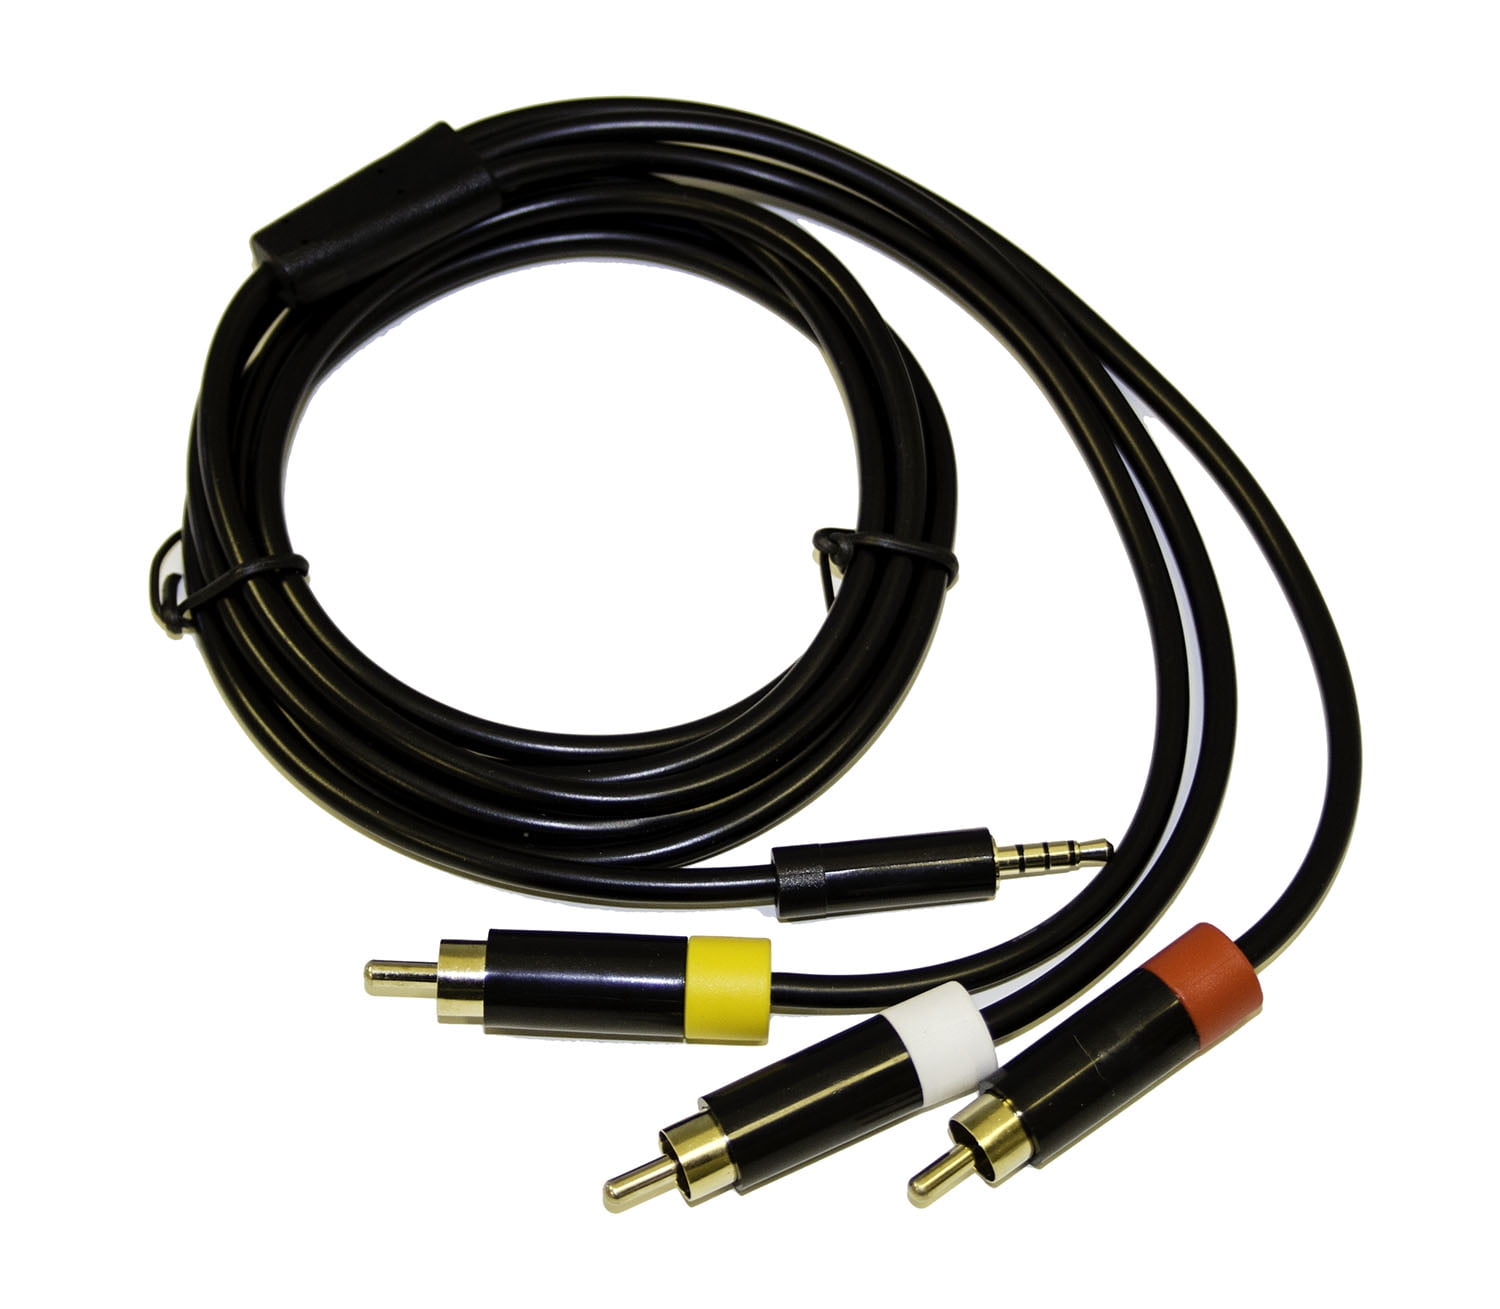 Composite AV Cable for XBox 360 E by Mars Devices - Walmart.com